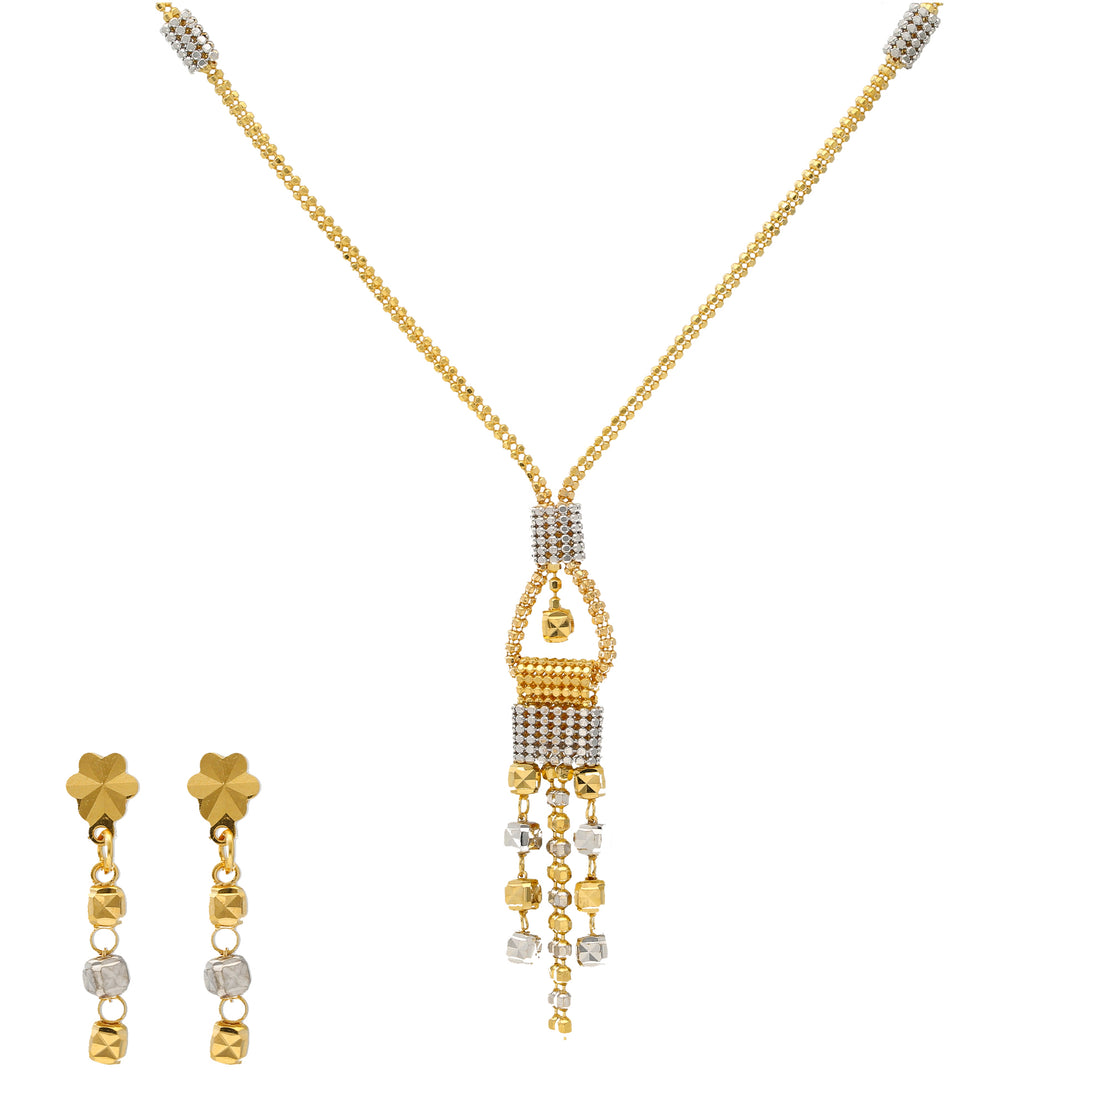 Exclusive Handmade Beaded Necklace Set,Simulant Gemstones,Pendant Size  50x60mm,Extendable Chain,Designer Fashion Jewelry Set,Beads size 10mm